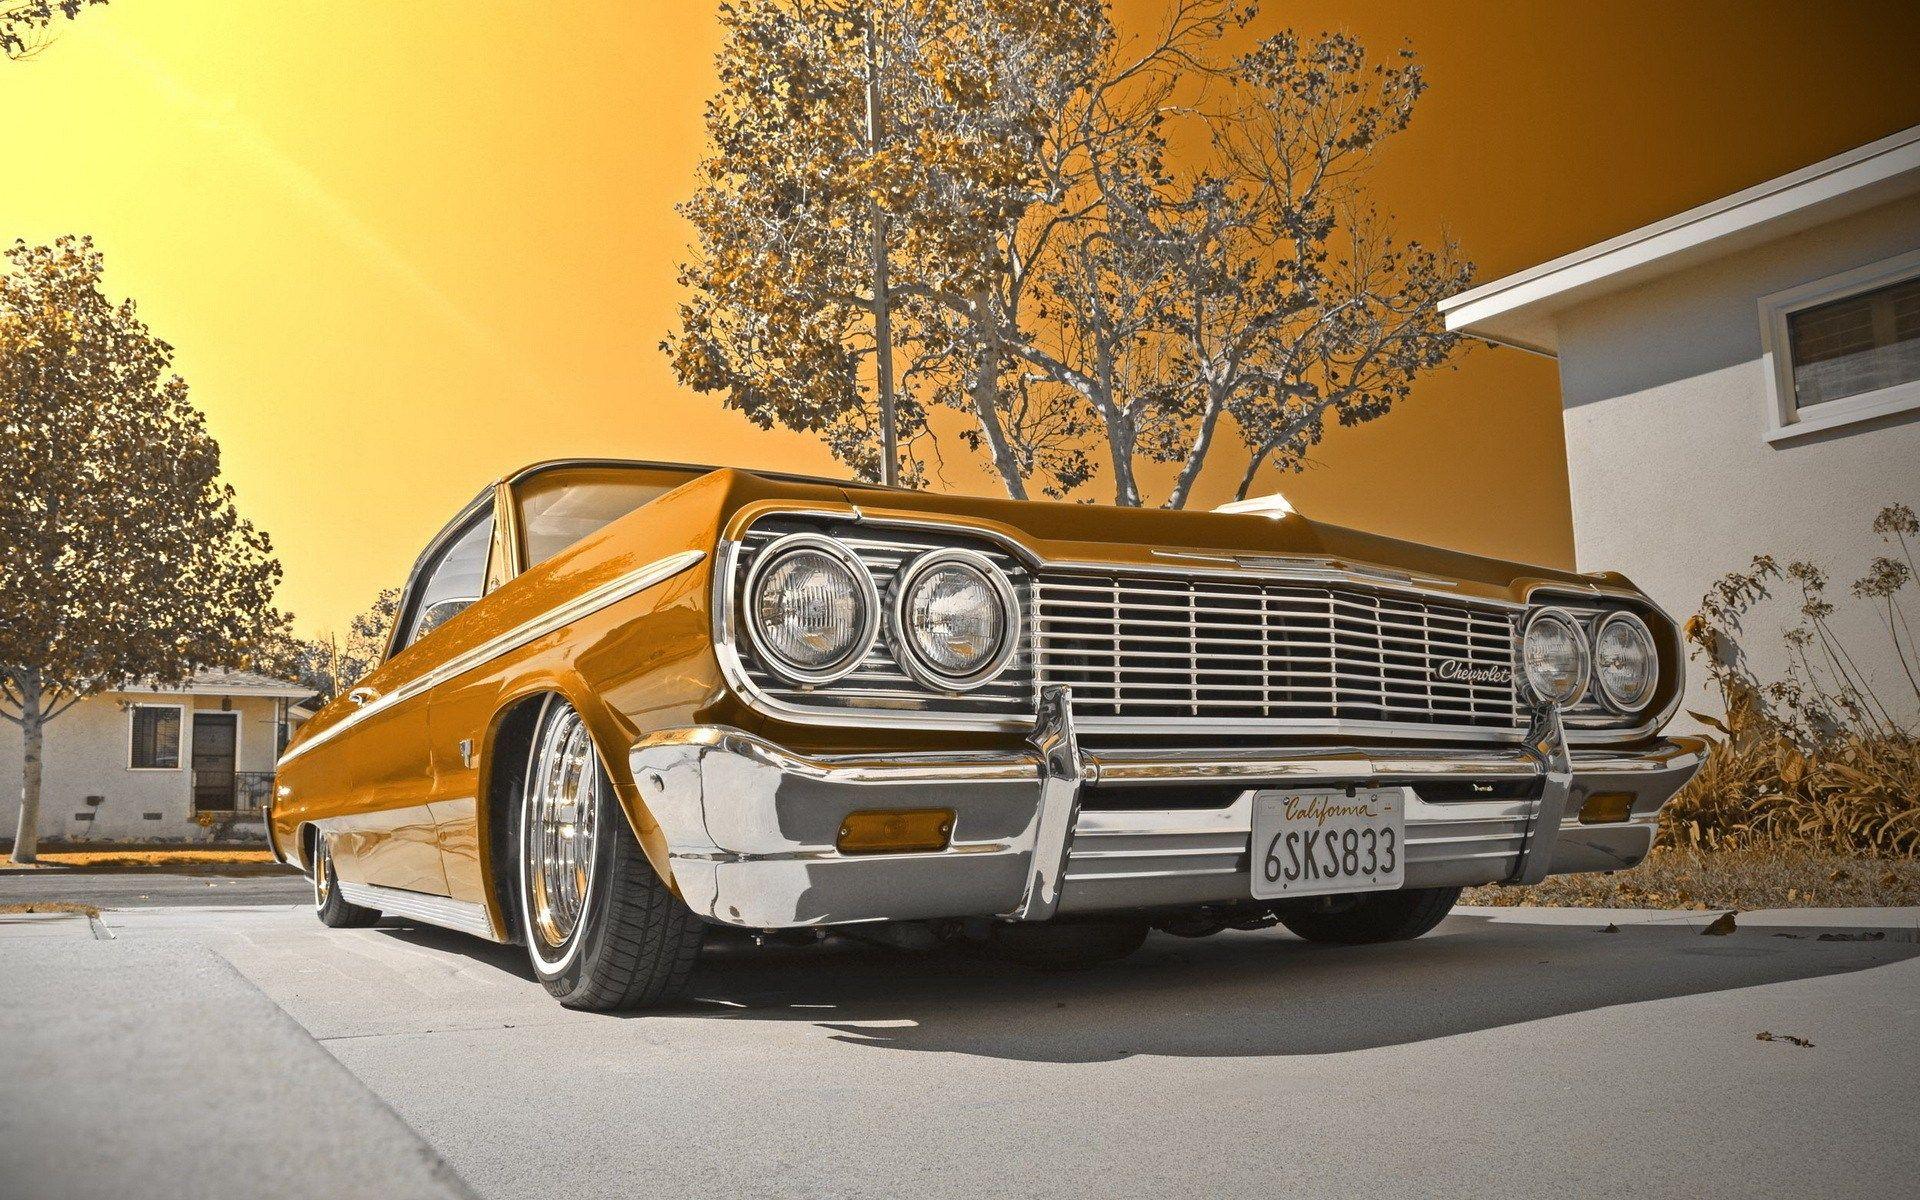 Chevy Impala Wallpaper